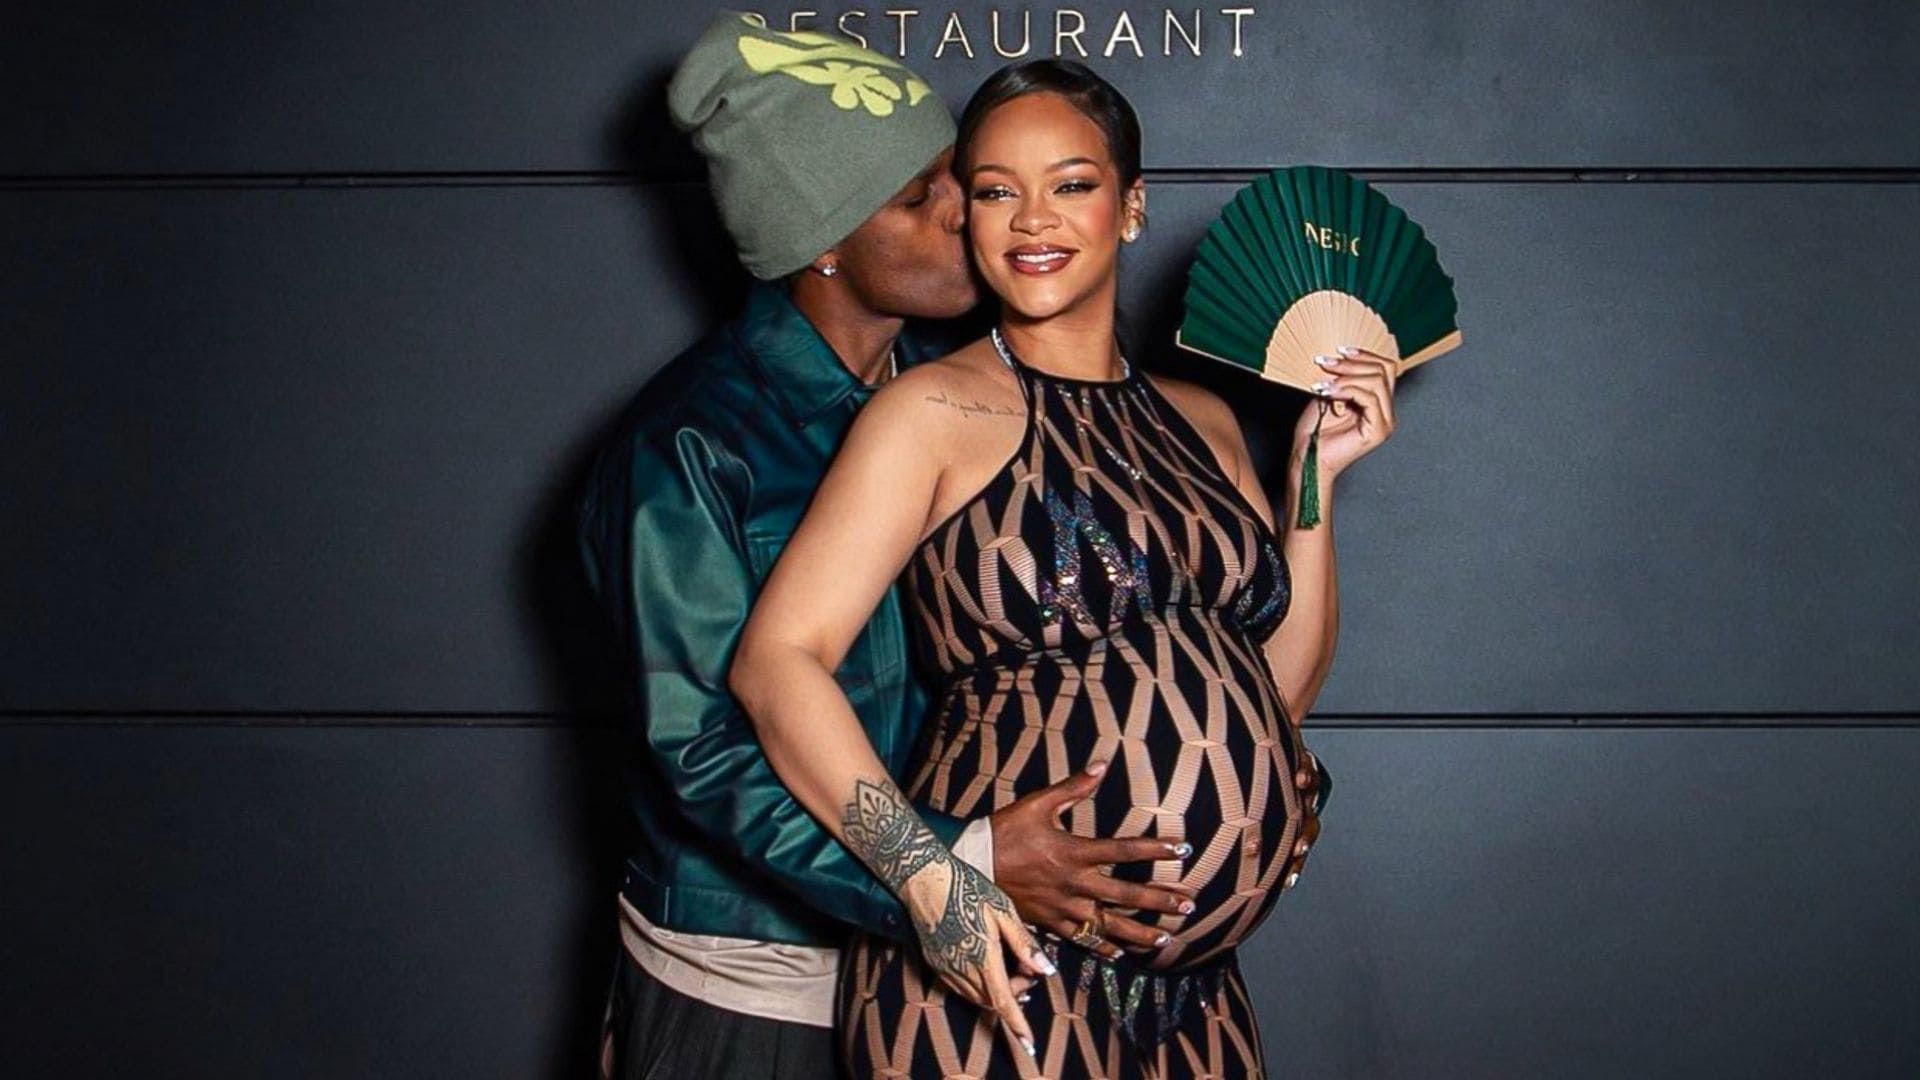 El rompedor posado de Rihanna en la recta final de su embarazo junto a A$AP Rocky